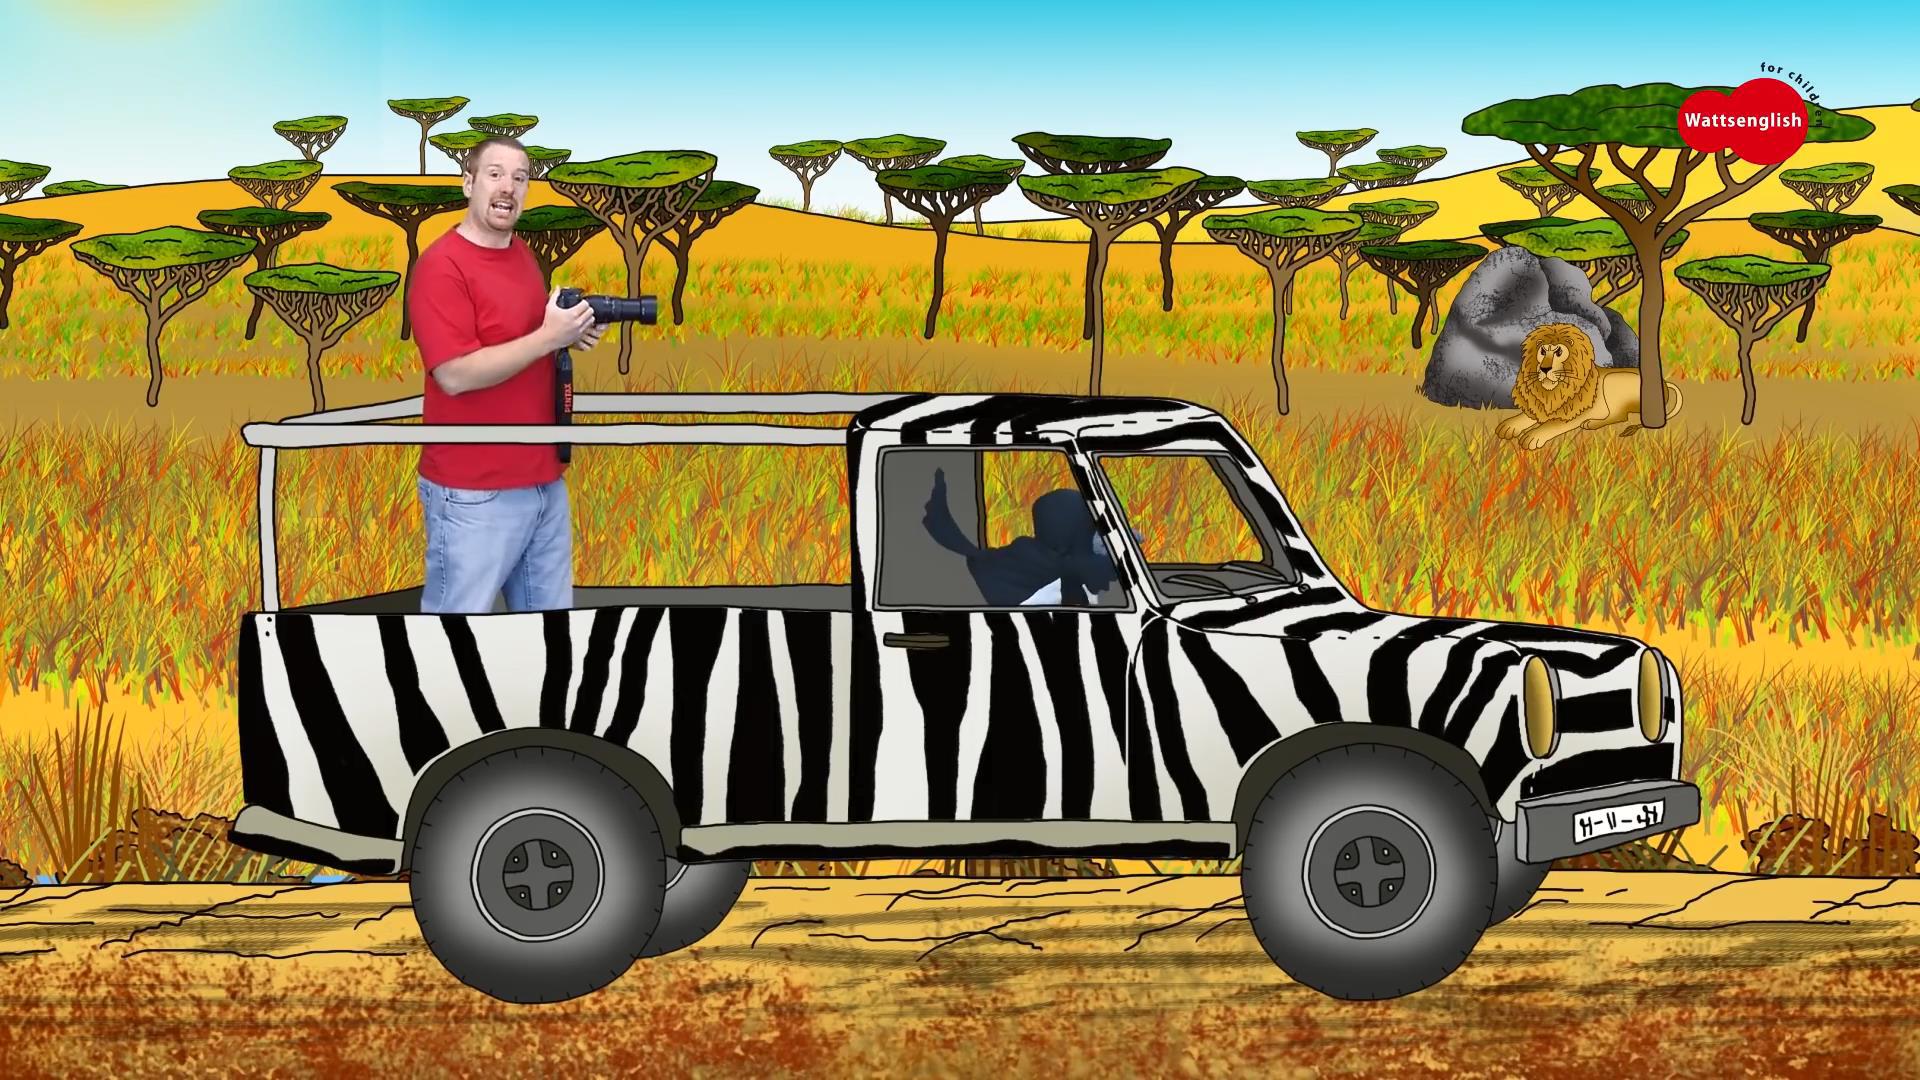 استیو و مگی - Steve and Maggie WOW English TV Racing through a Wild Animal Safari